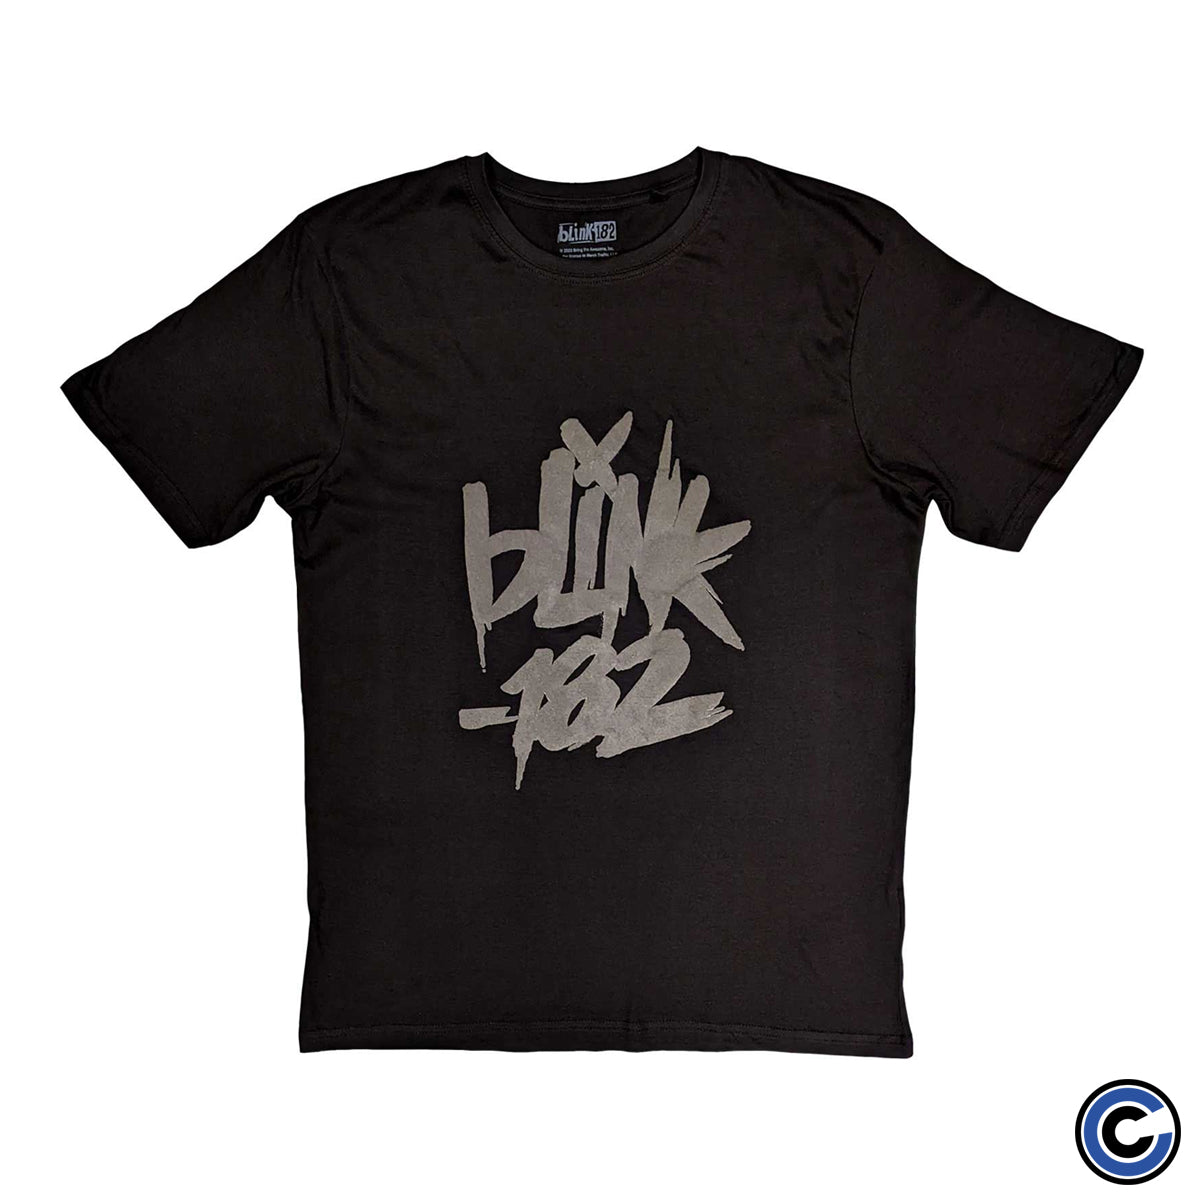 Blink-182 "Neon Logo" Shirt